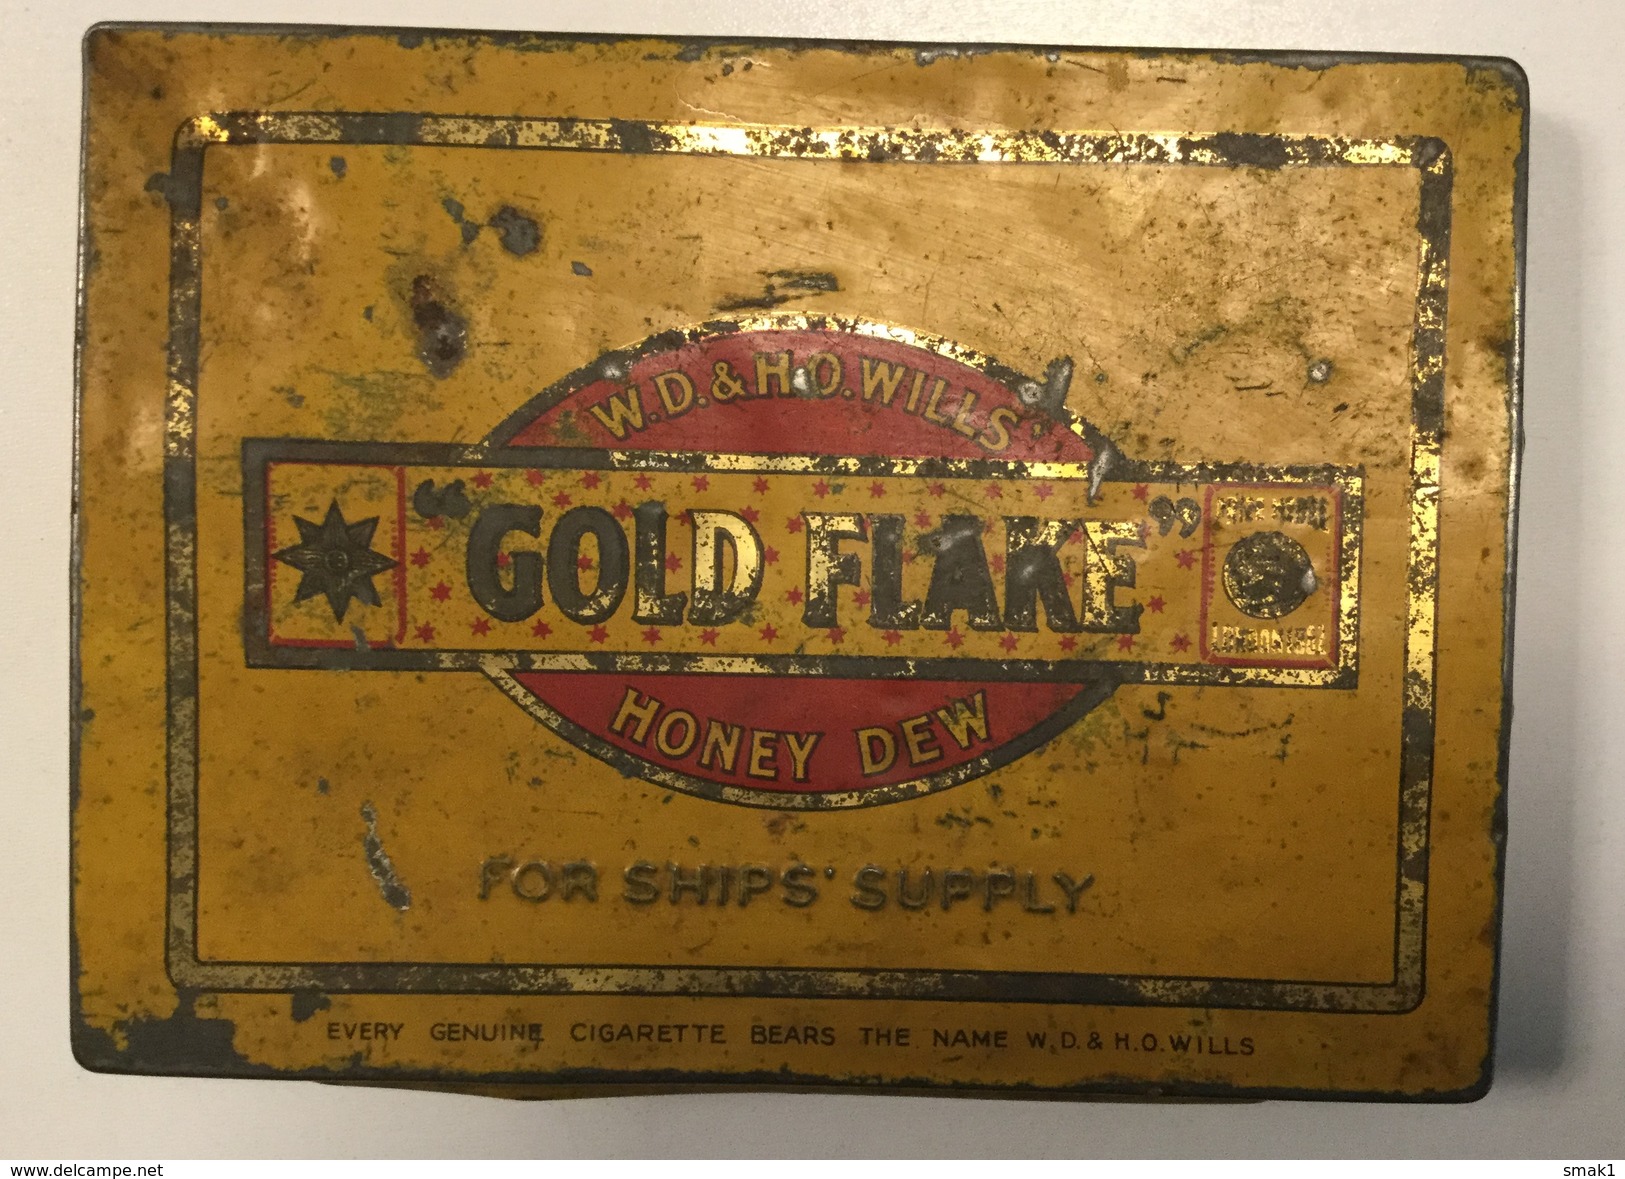 EMPTY  TOBACCO  BOX    TIN     GOLD FLAKE   W.D. & H.O. WILLS  HONEY DEW - Cajas Para Tabaco (vacios)